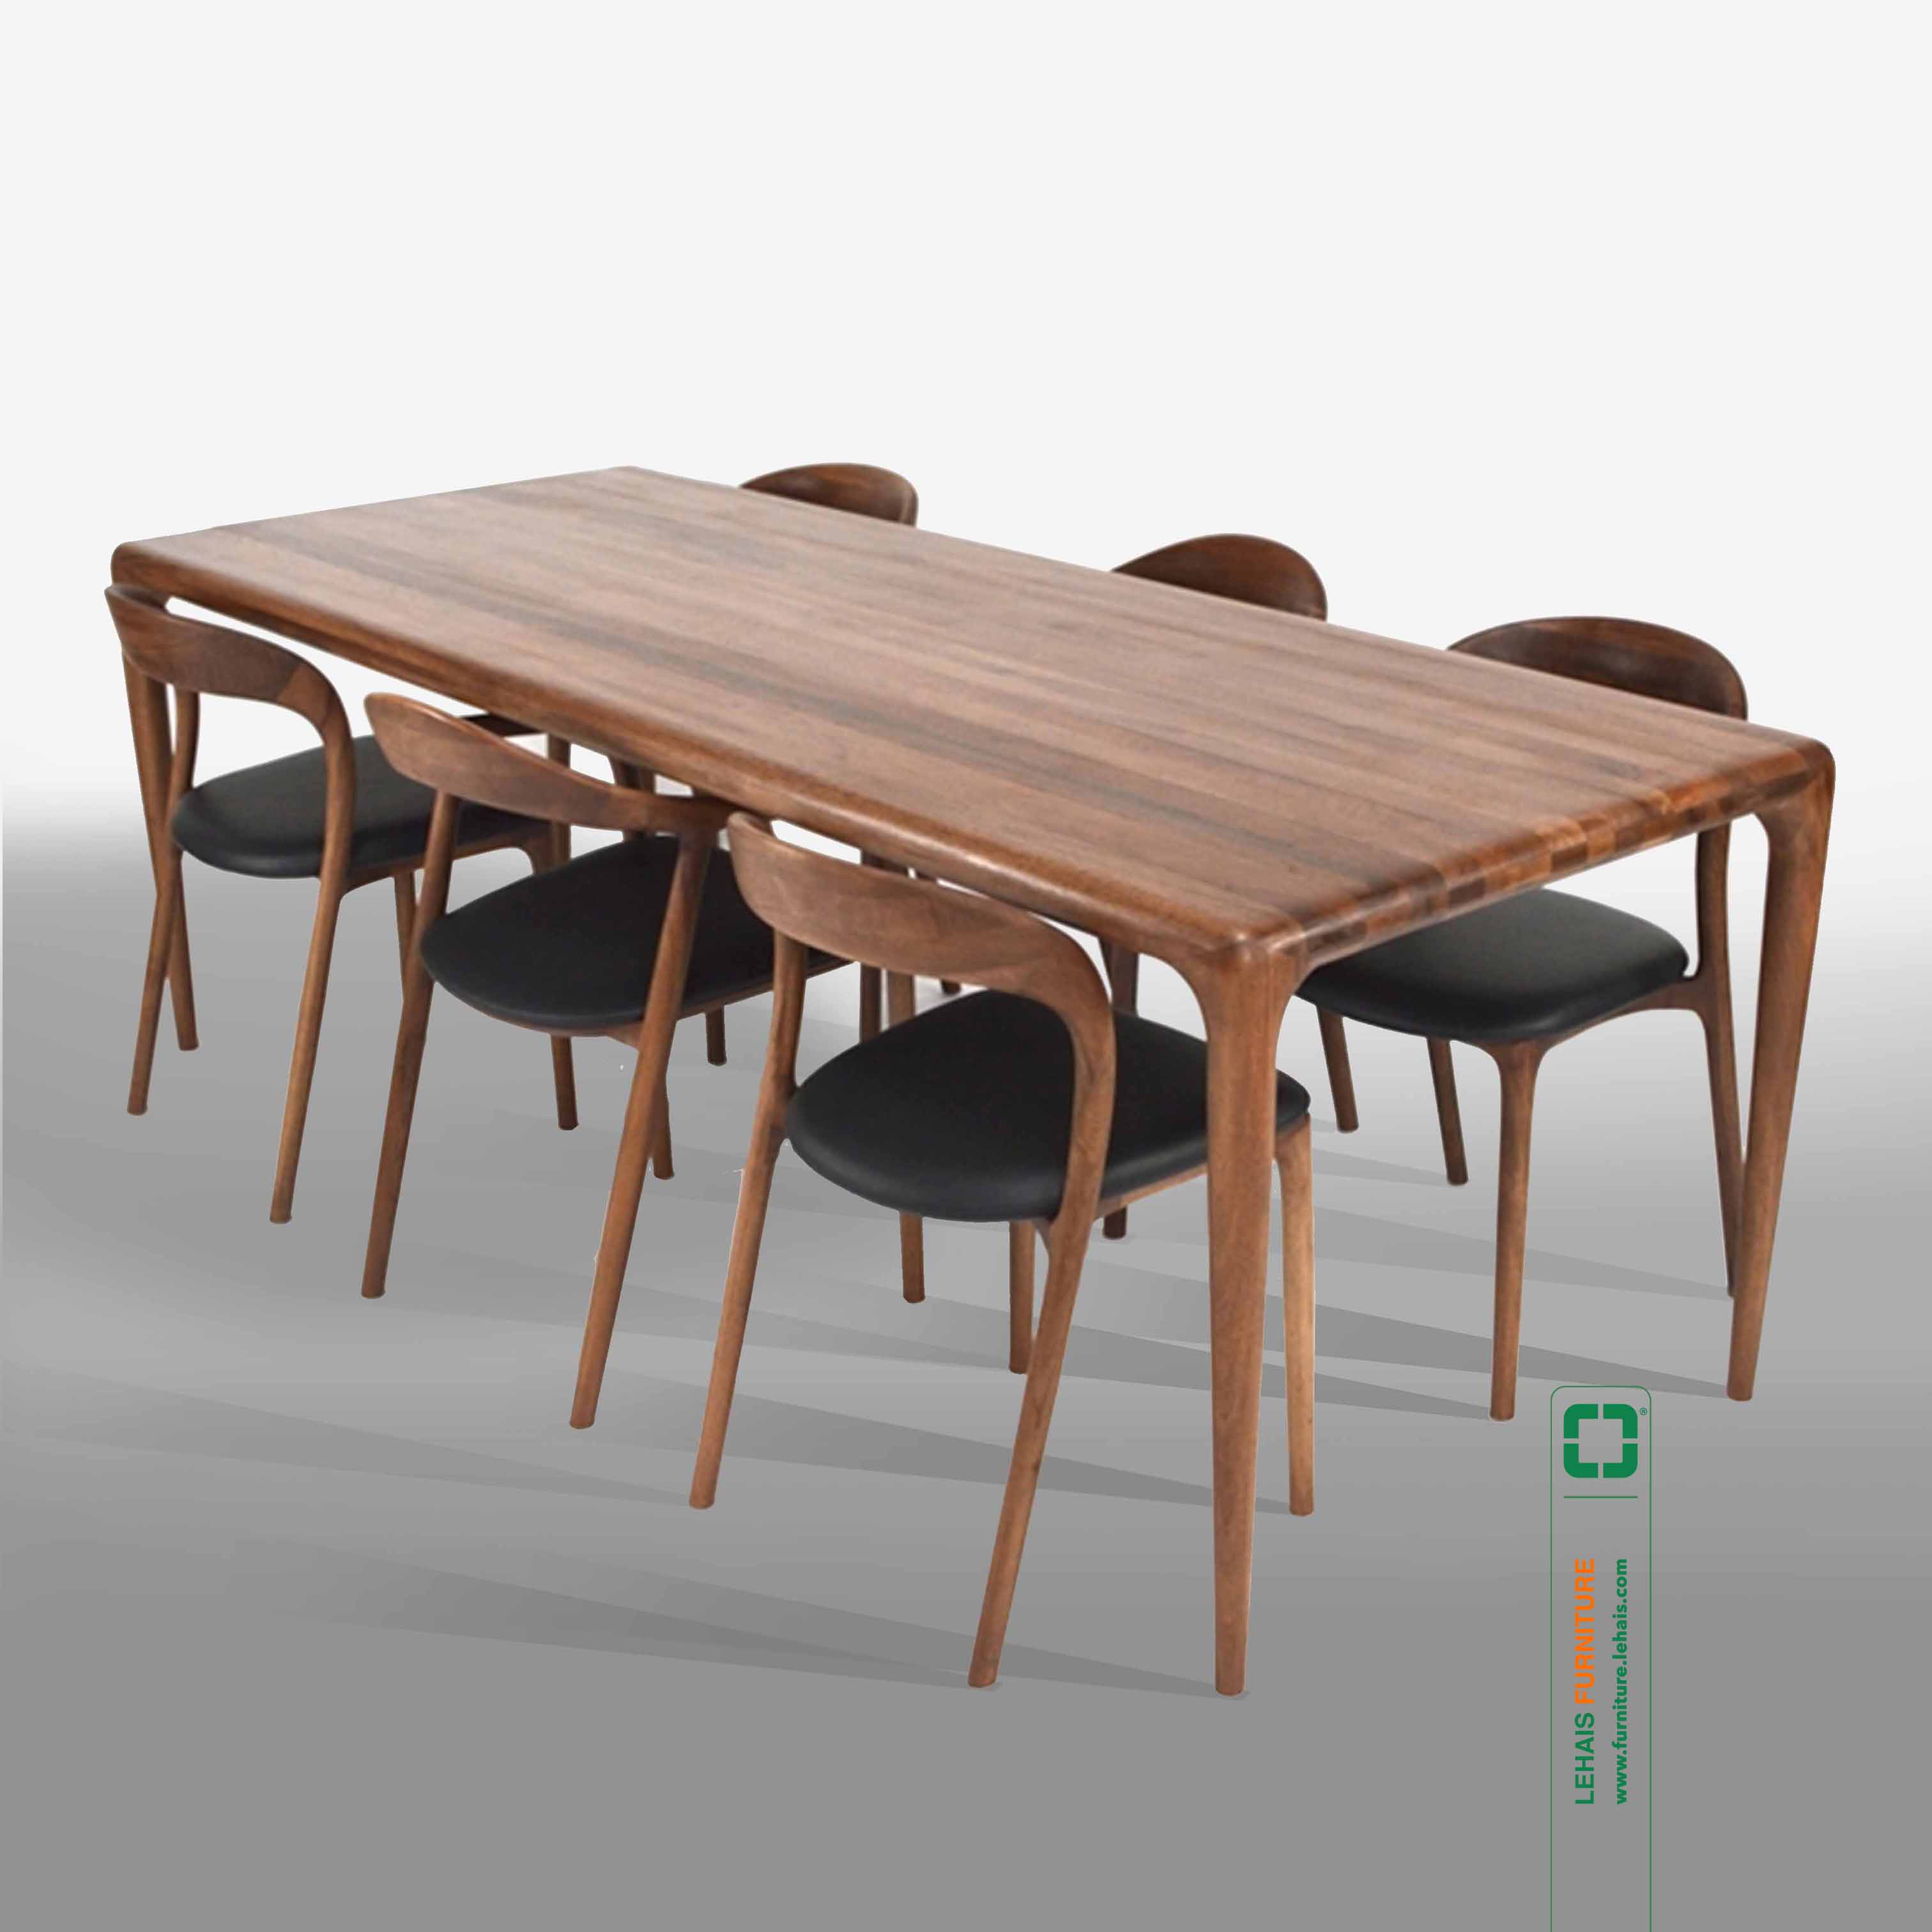 Latus table and chair set Neva - BG1LHFU